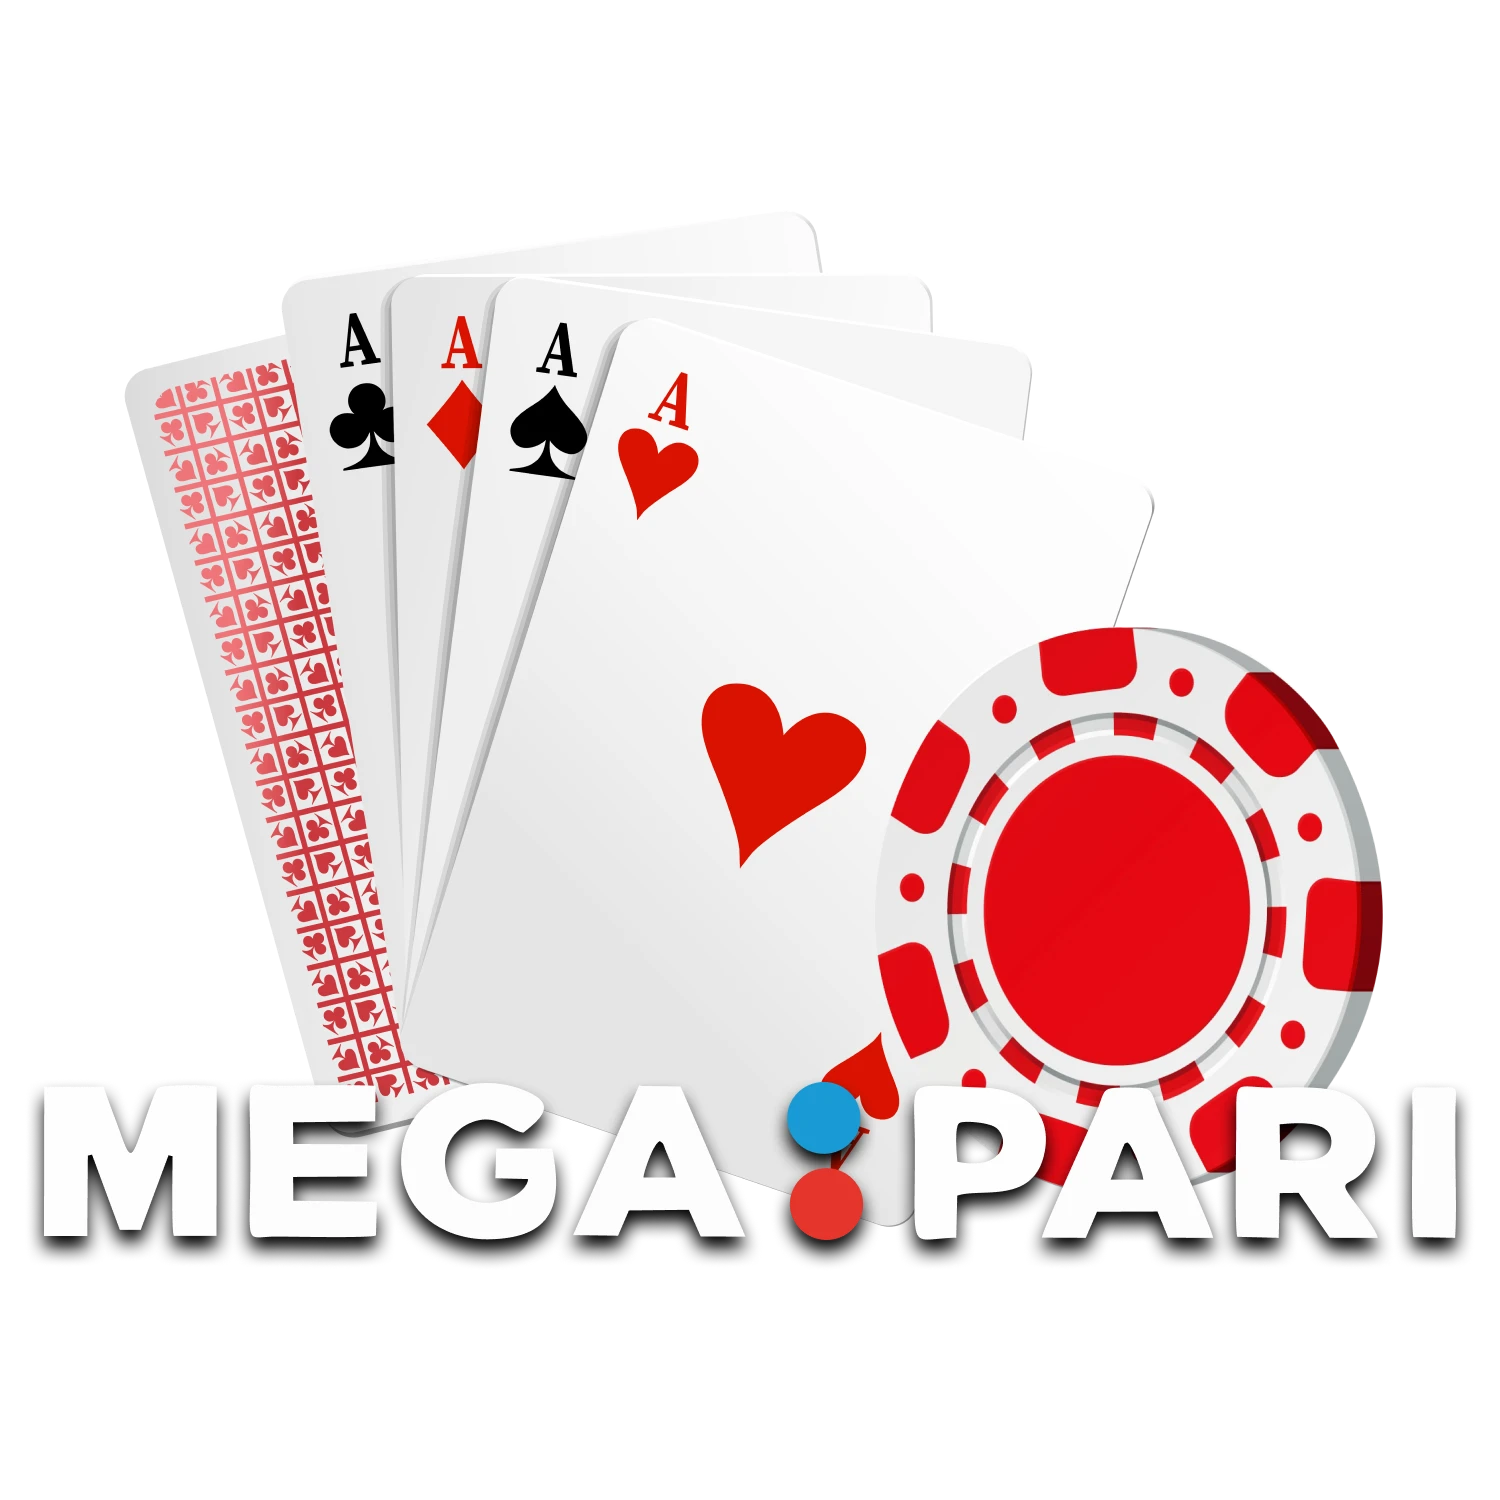 For casino games from Megapari, choose blackjack.